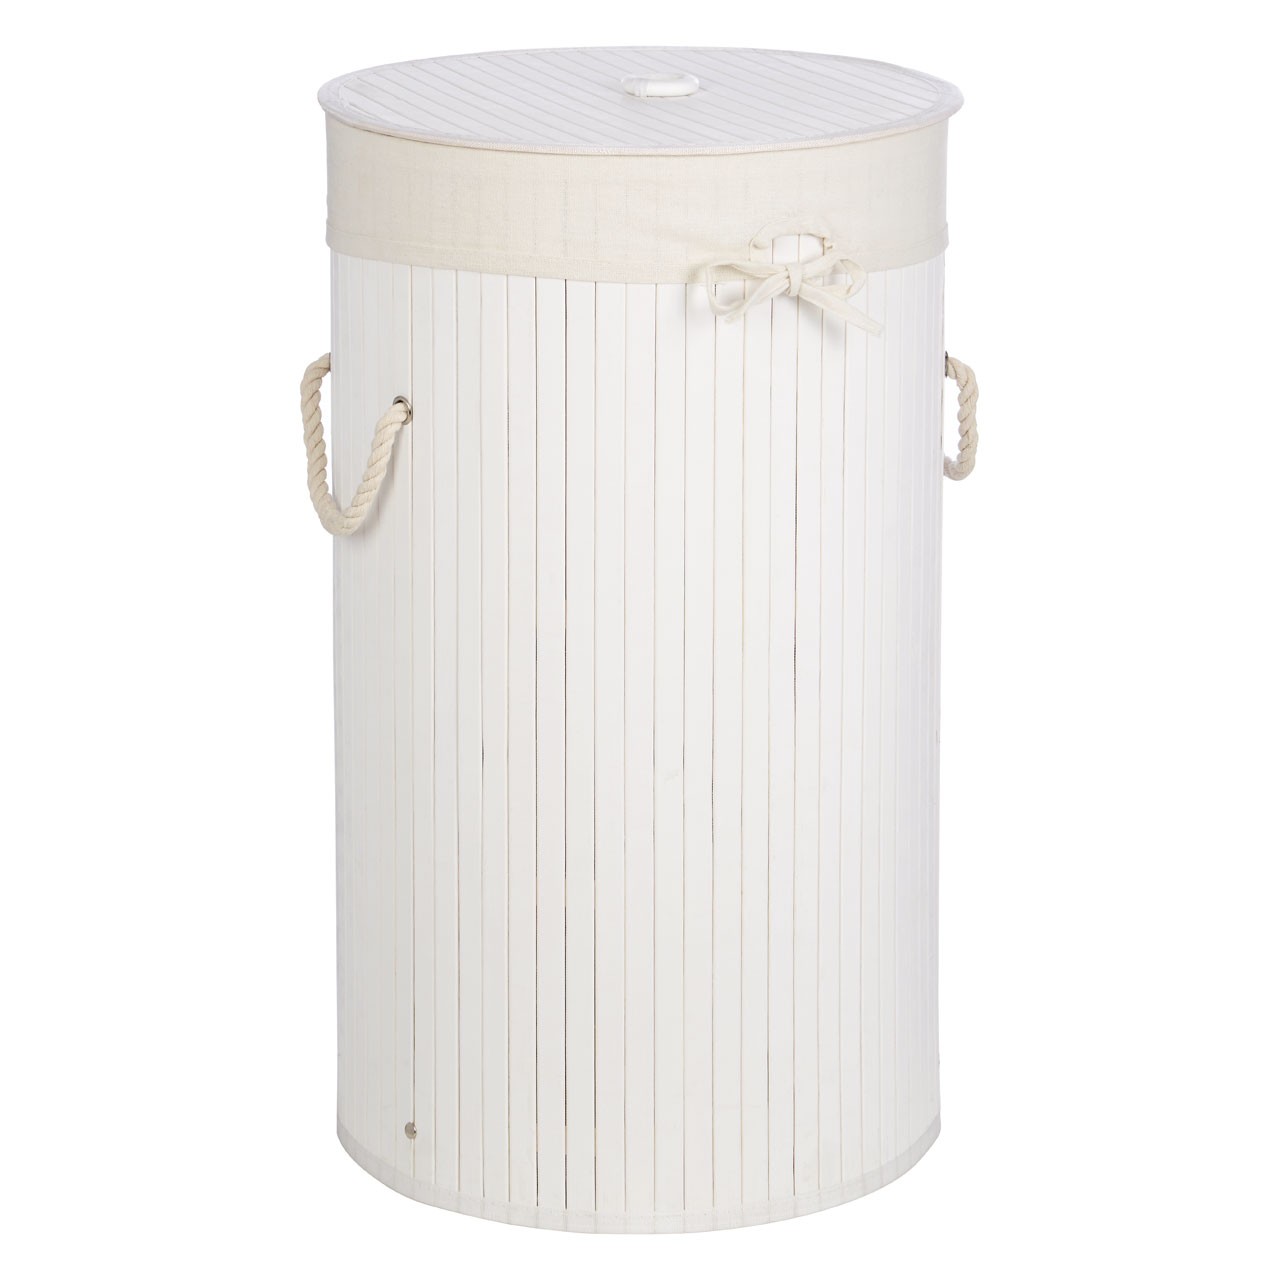 Prime Furnishing Kankyo Bamboo Round Laundry Hamper, White